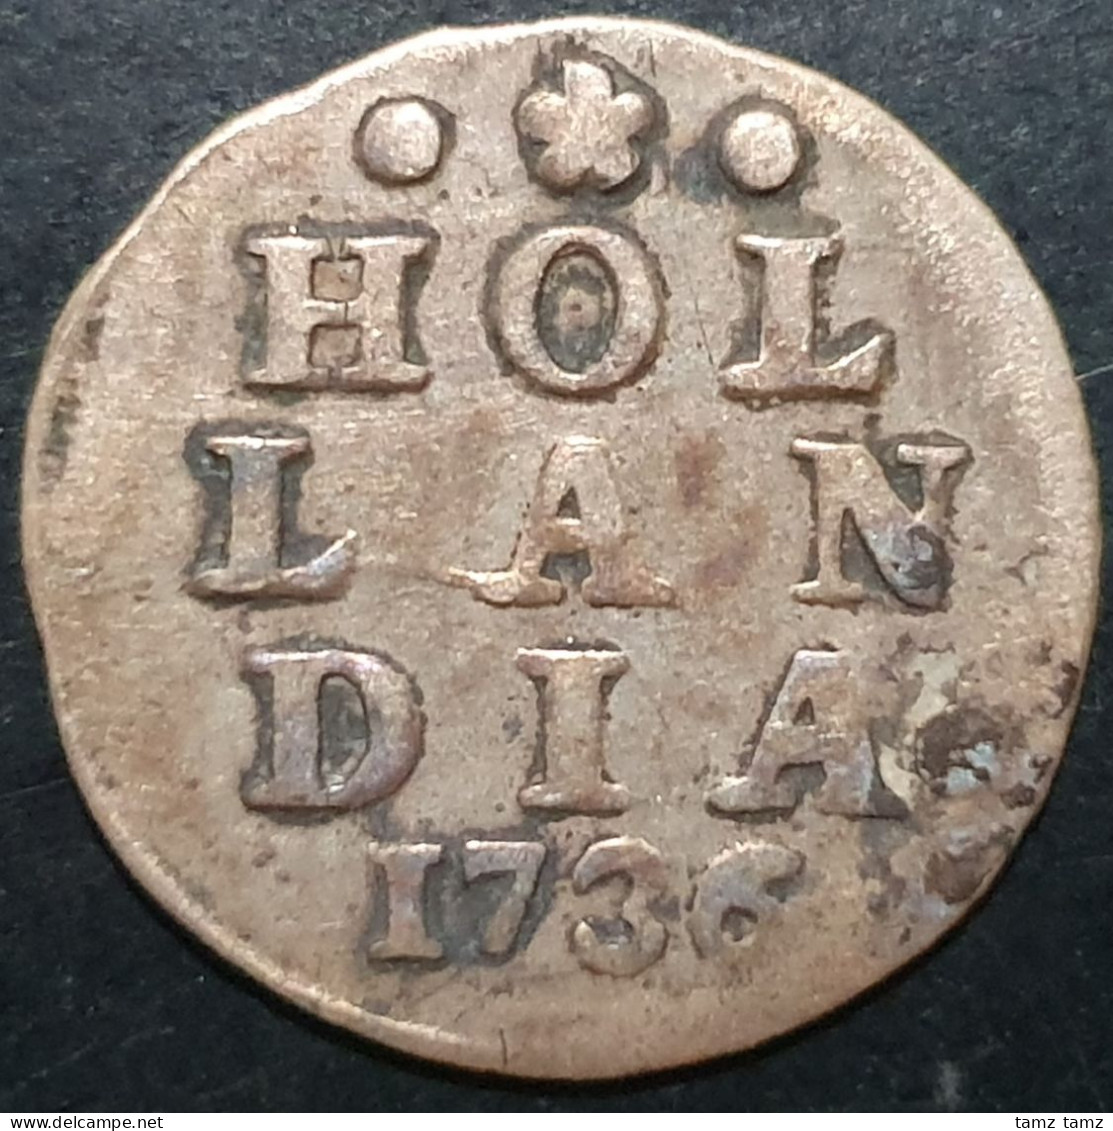 Provincial Dutch Netherlands Holland Hollandia 2 Stuiver 1736 Silver - Provincial Coinage